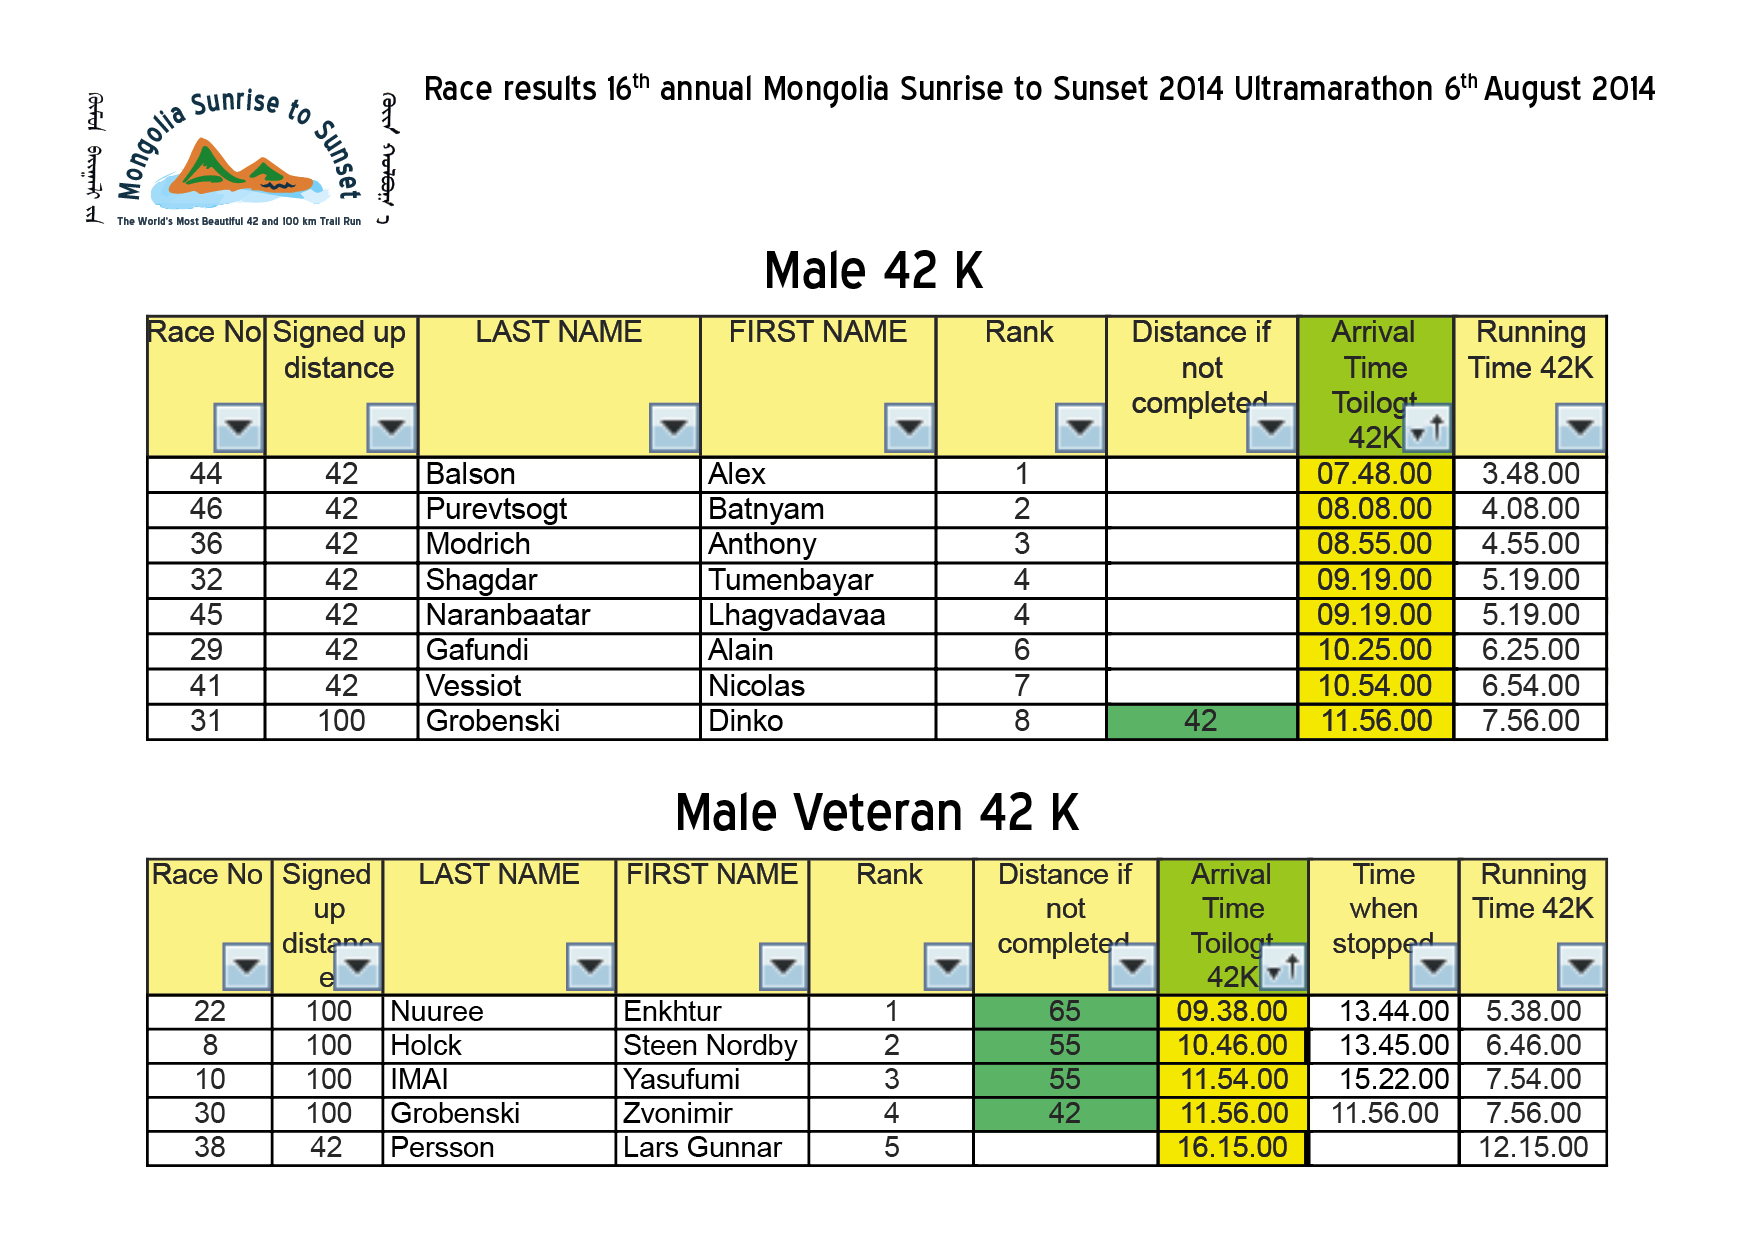 Race results 16th annual Mongolia Sunrise to Sunset 2014 Ultramarathon2